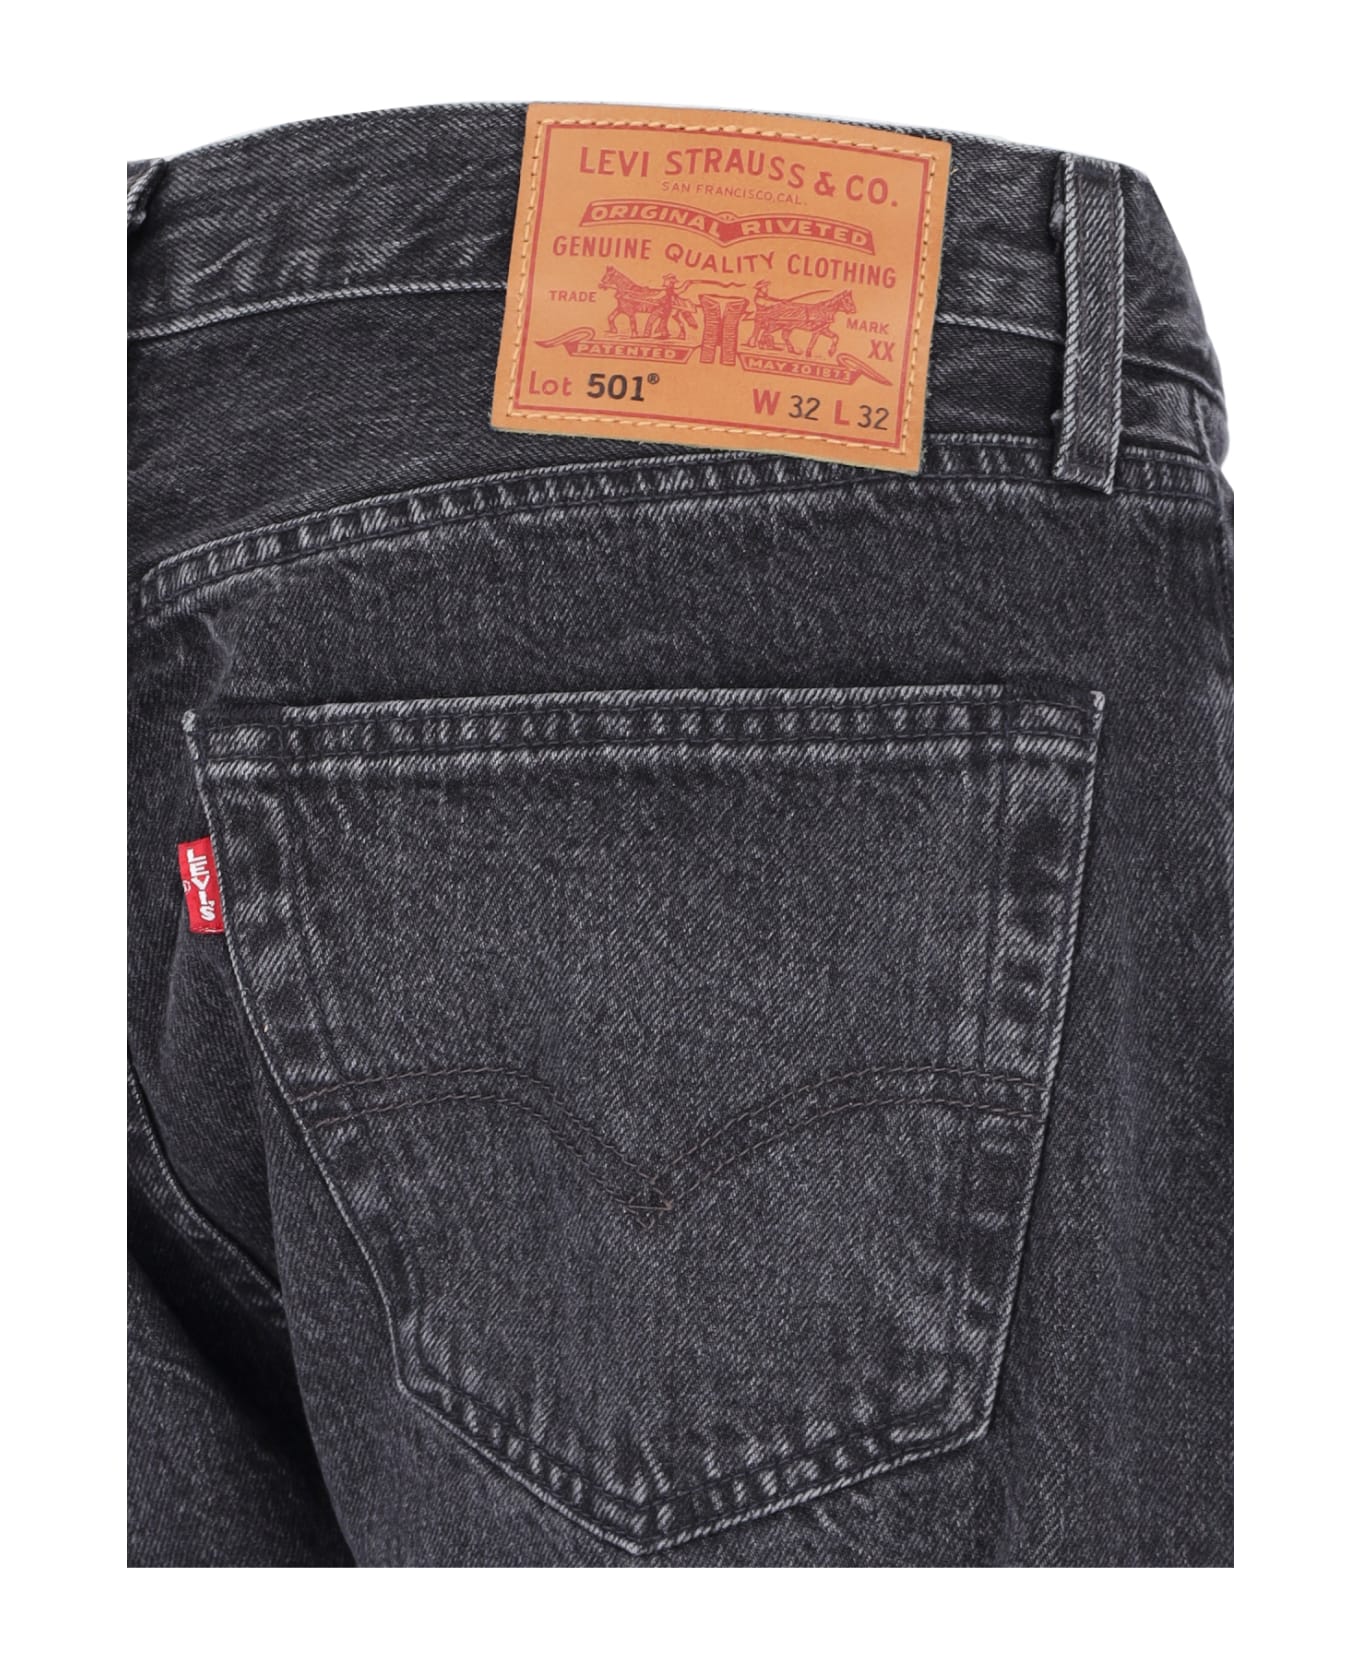 Levi's '501' Jeans - Black  